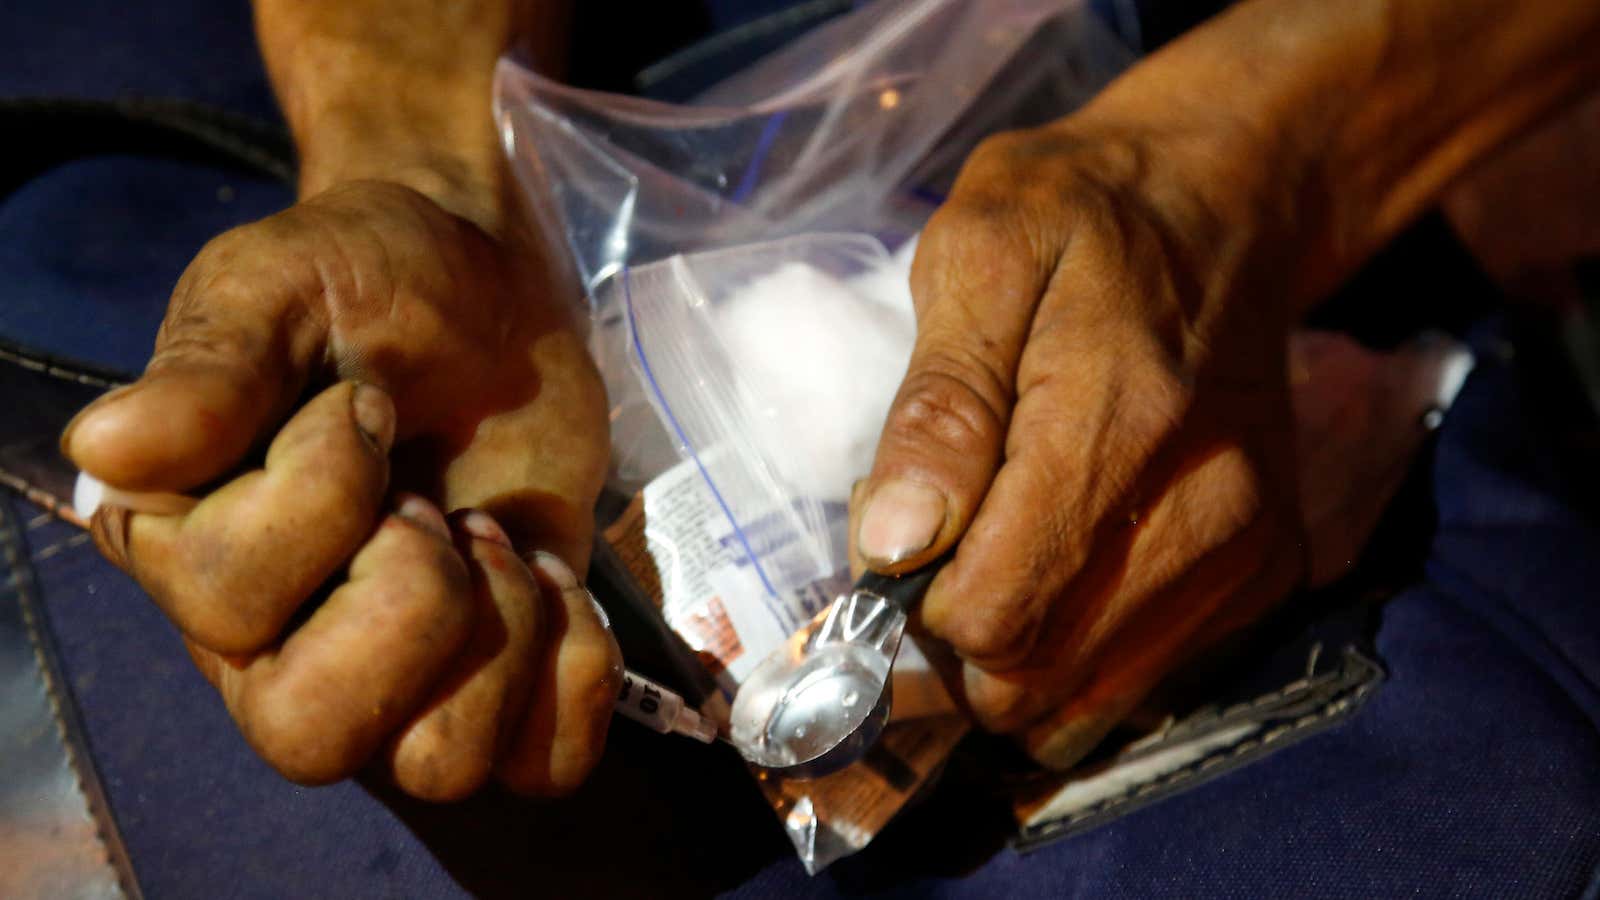 Drug overdose deaths are rising in America.